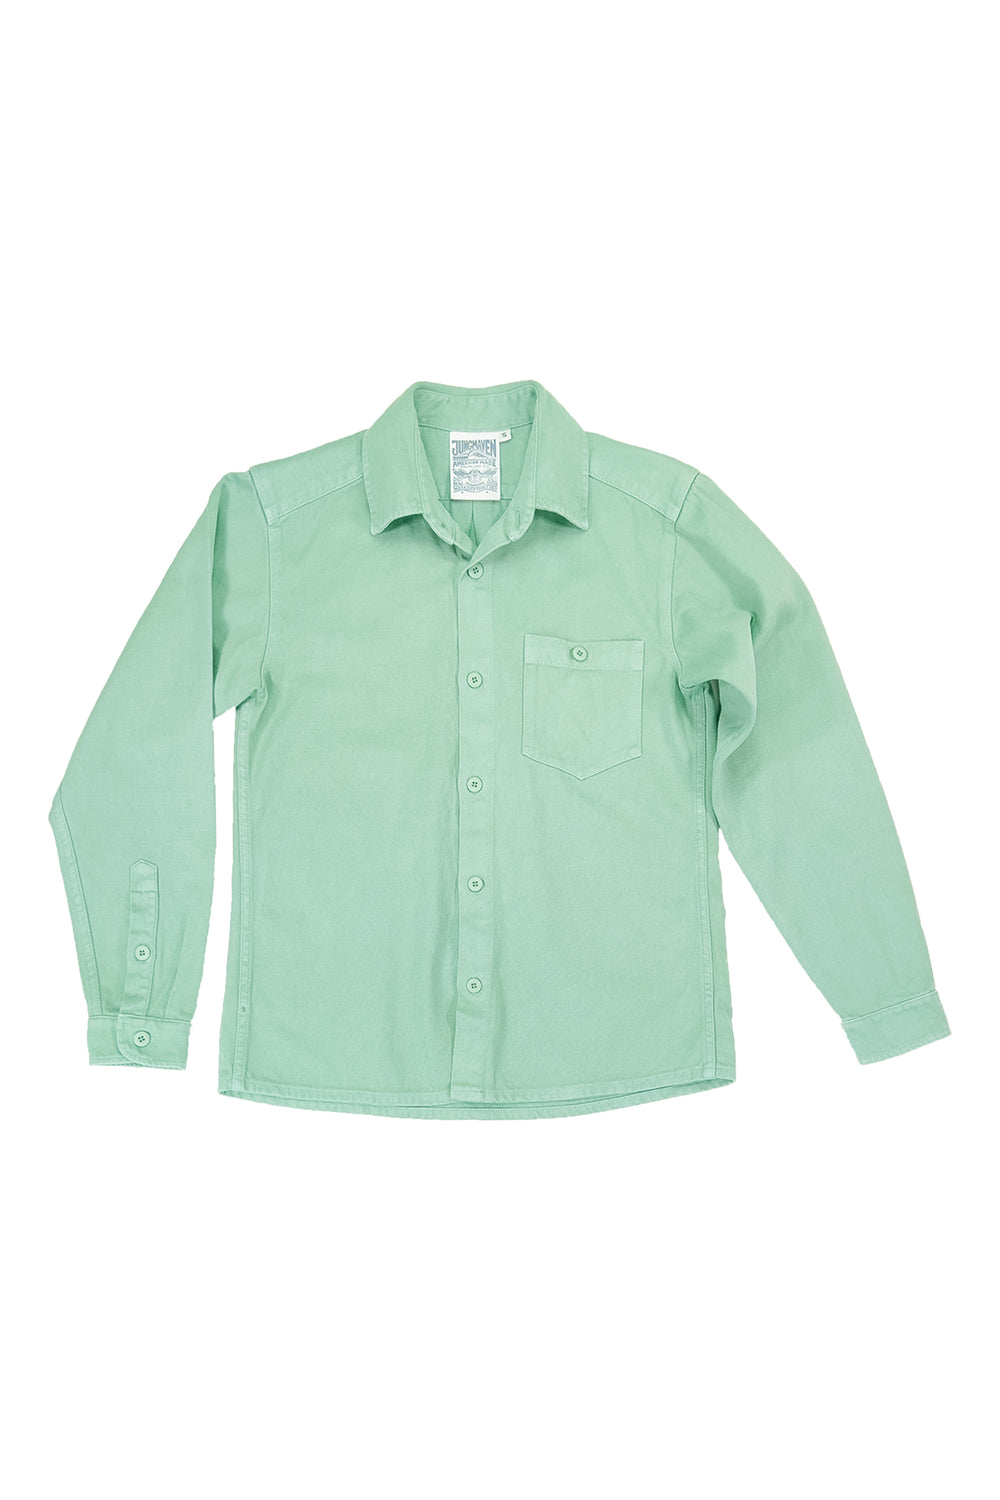 Topanga Shirt | Jungmaven Hemp Clothing & Accessories / Color: Sage Green